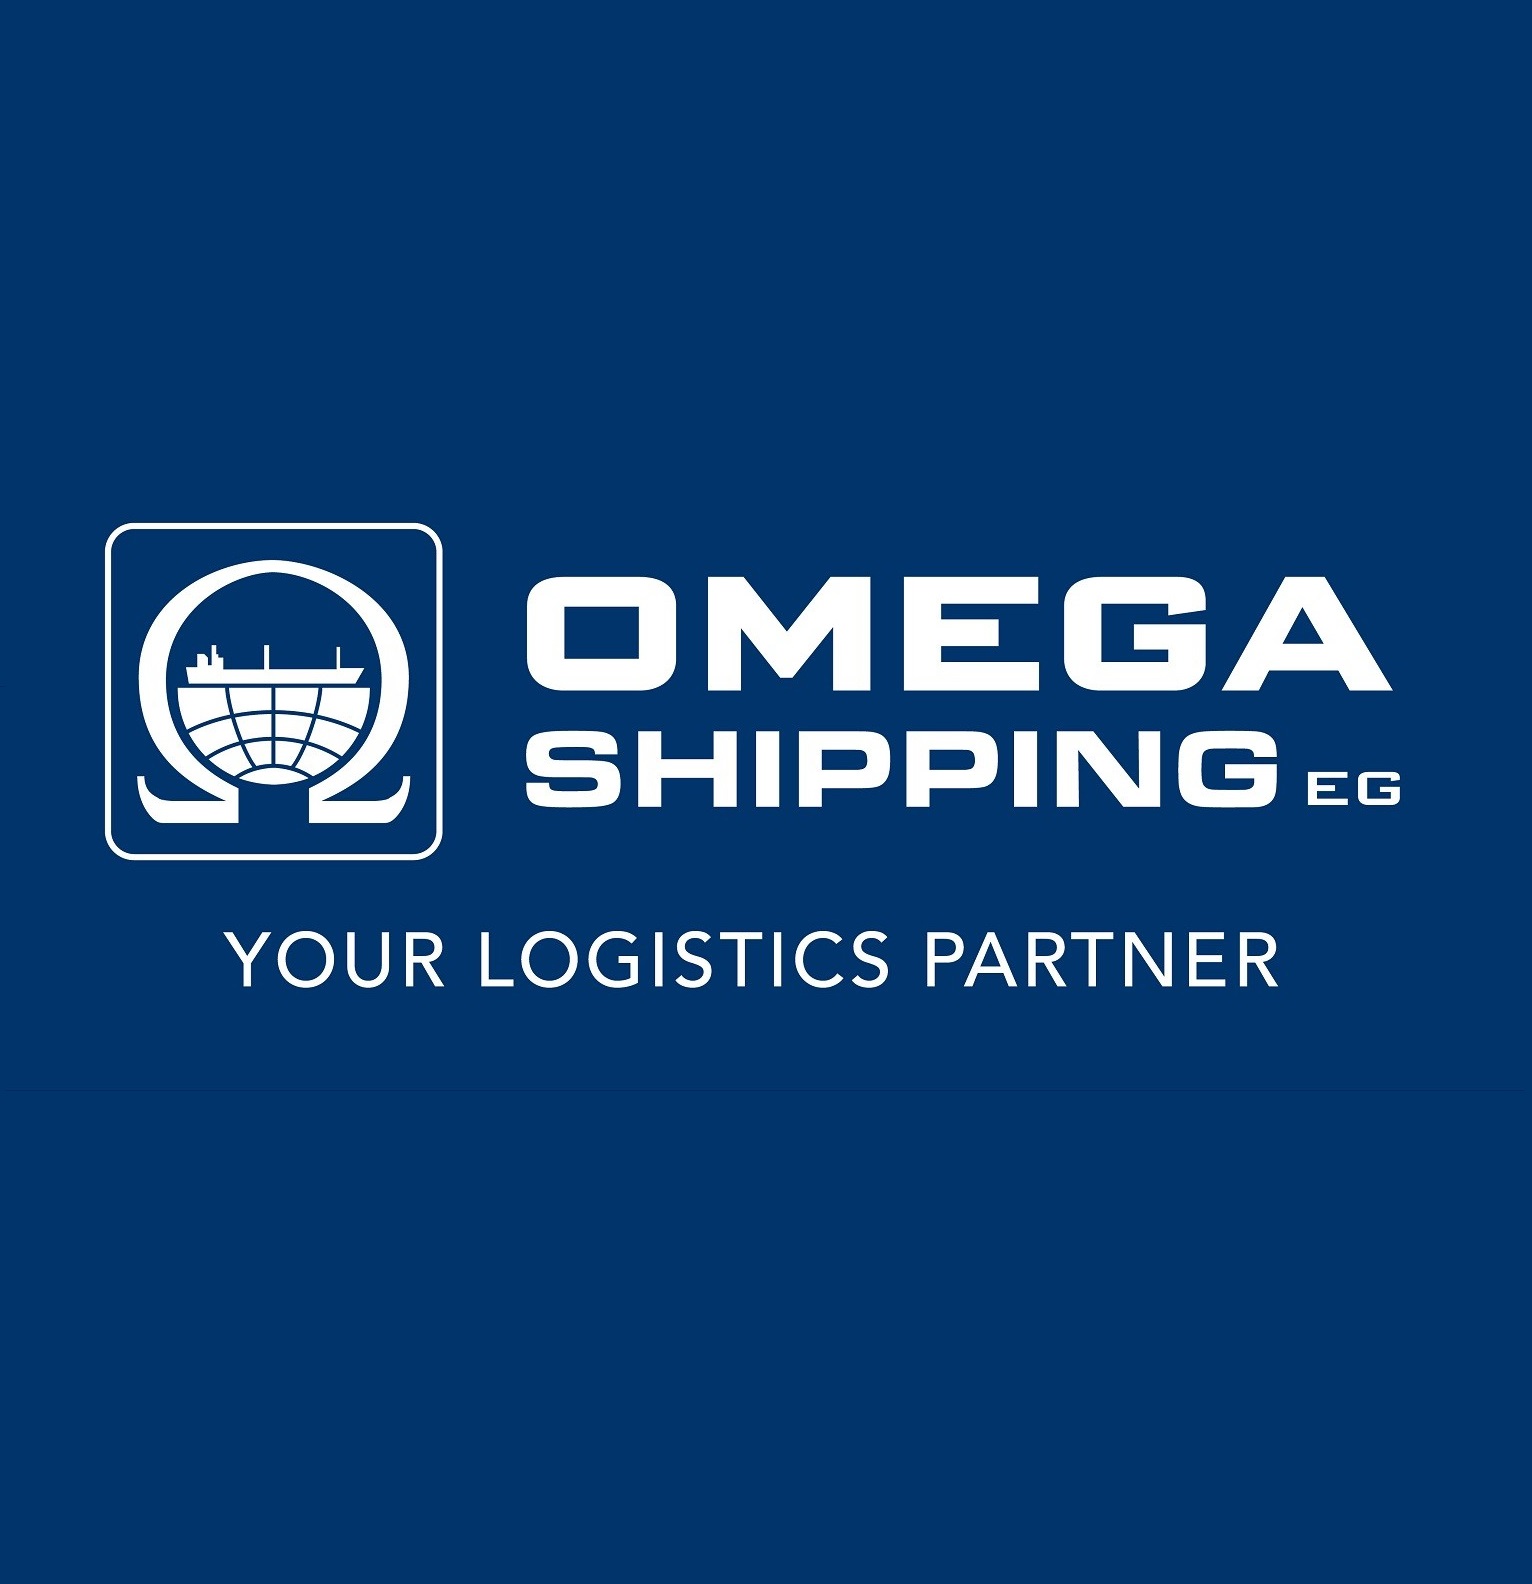 Omega Shipping EG